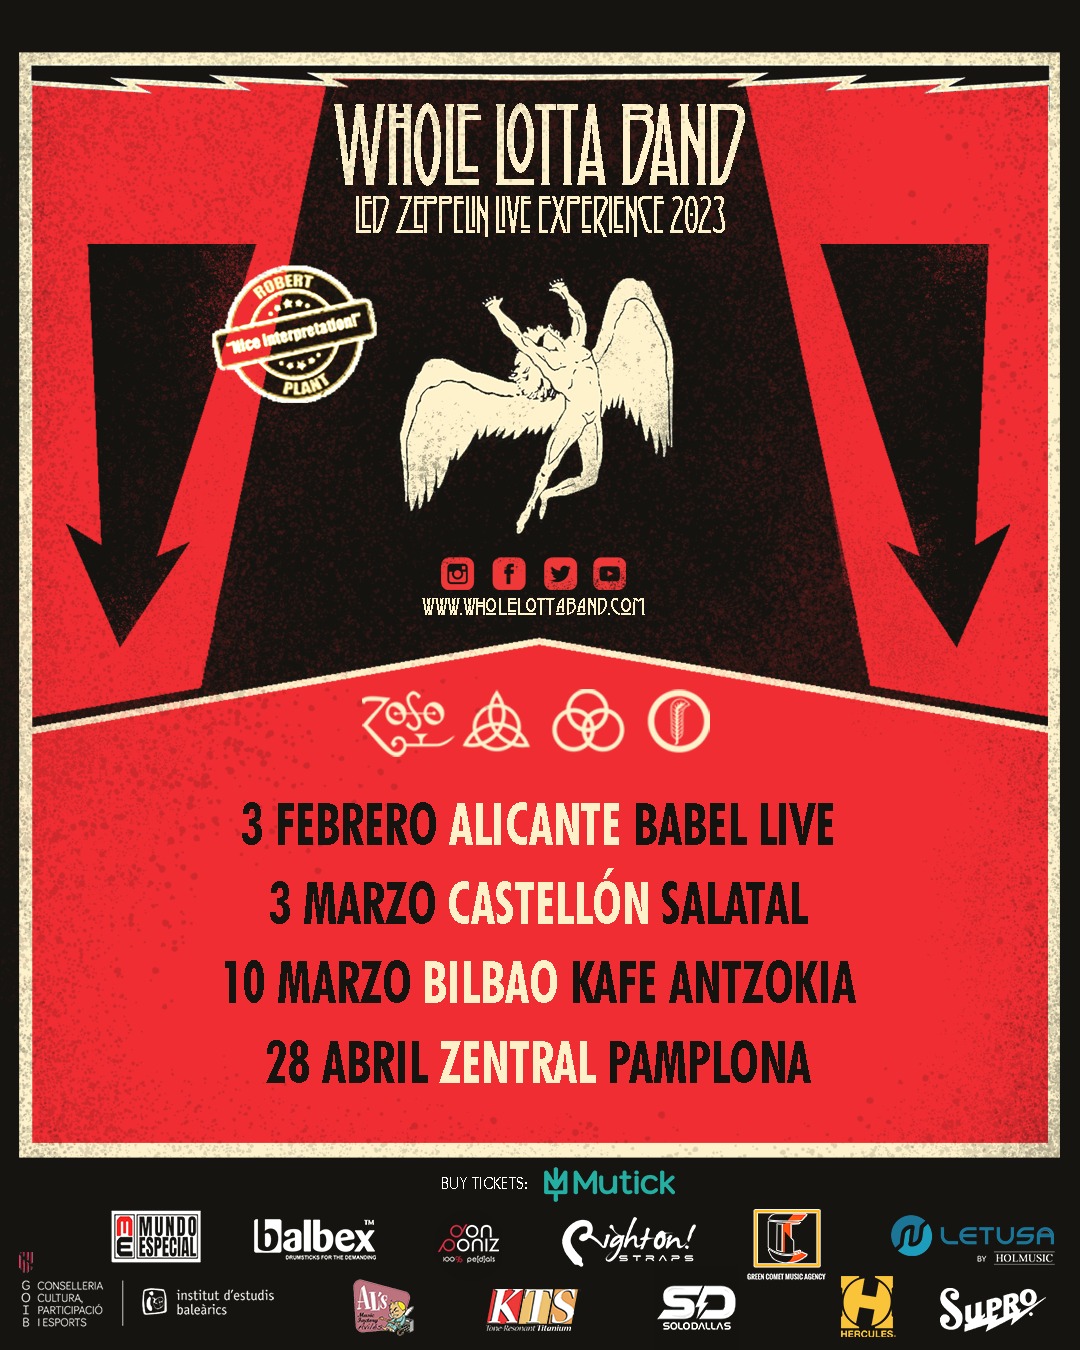 Whole Lotta Band - Led Zeppelin Live Experience en Bilbao - CANCELADO - Mutick